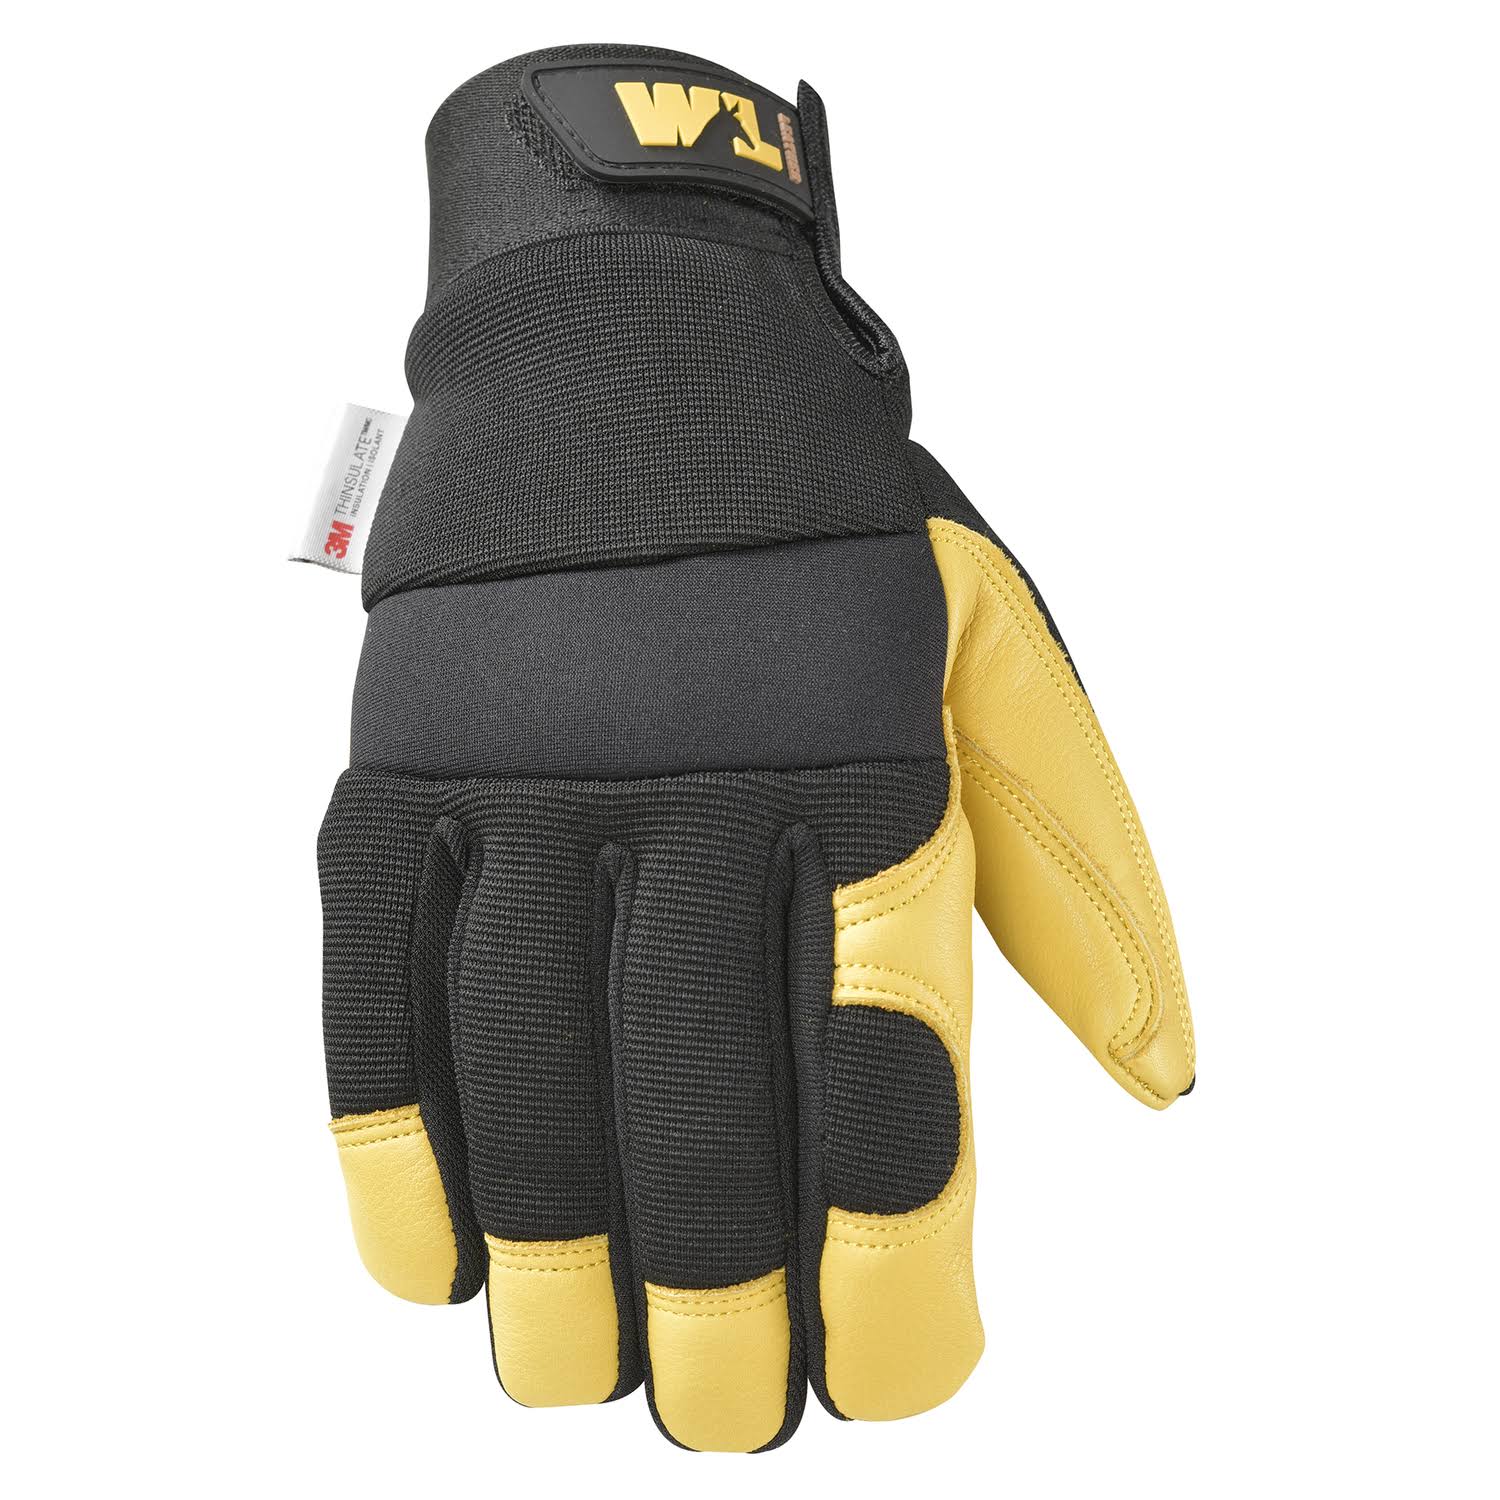 Wells Lamont 3233xl Men's Saddletan Grain Winter Work Gloves, XL